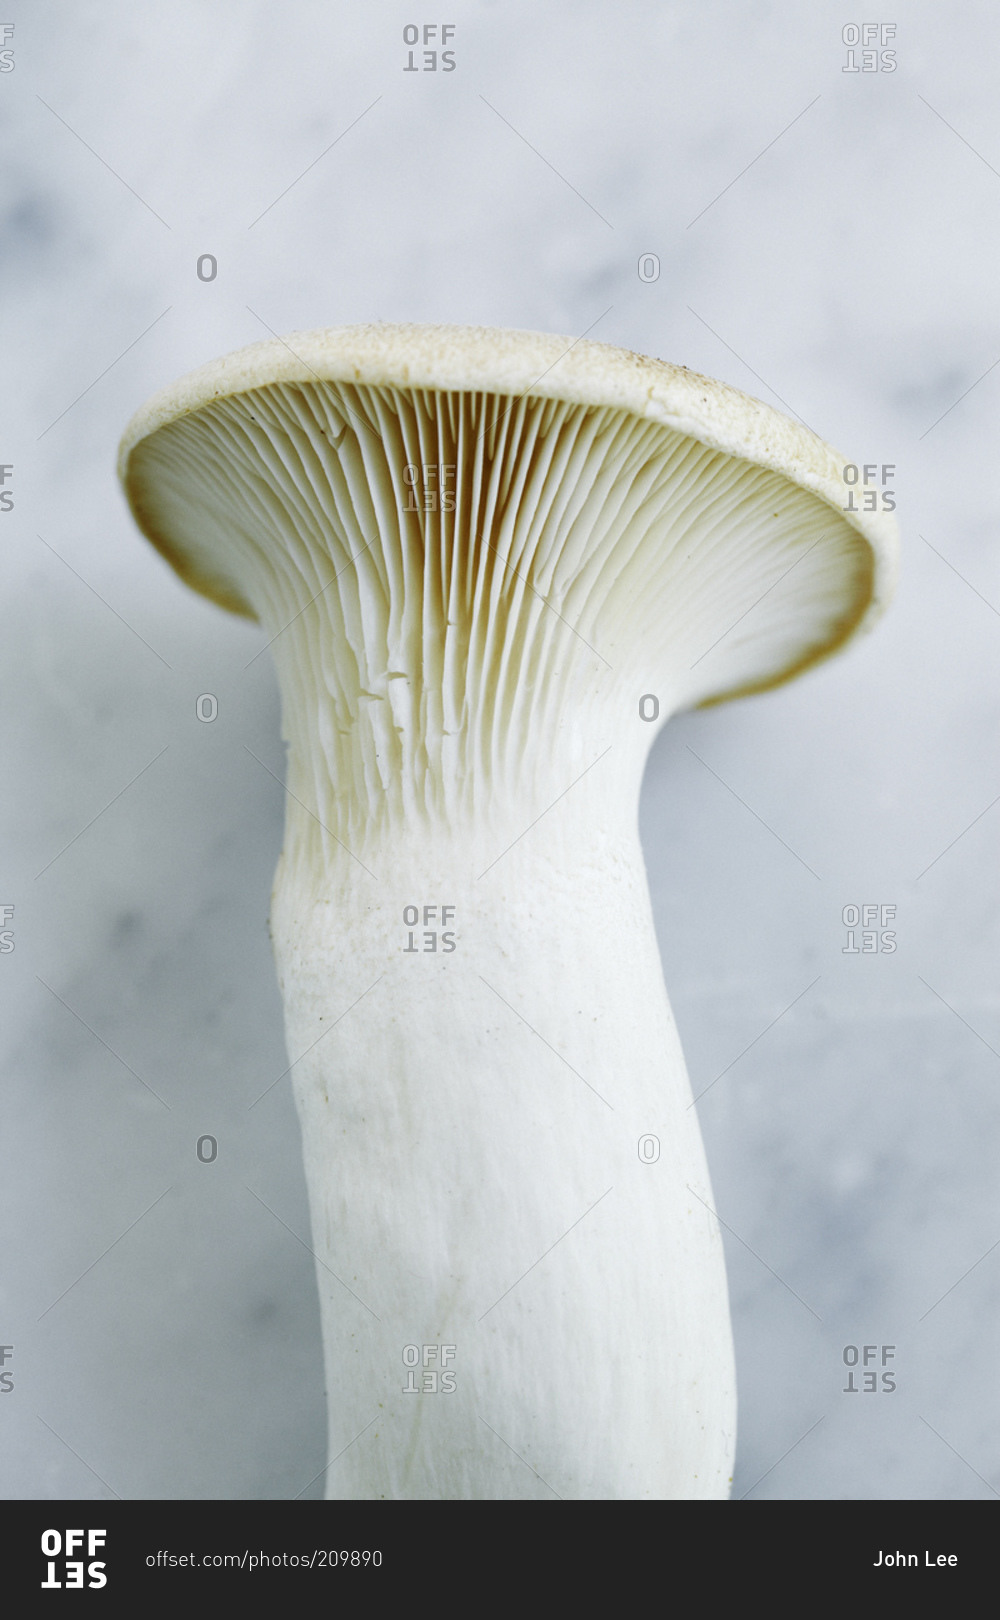 Close up of a king trumpet mushroom